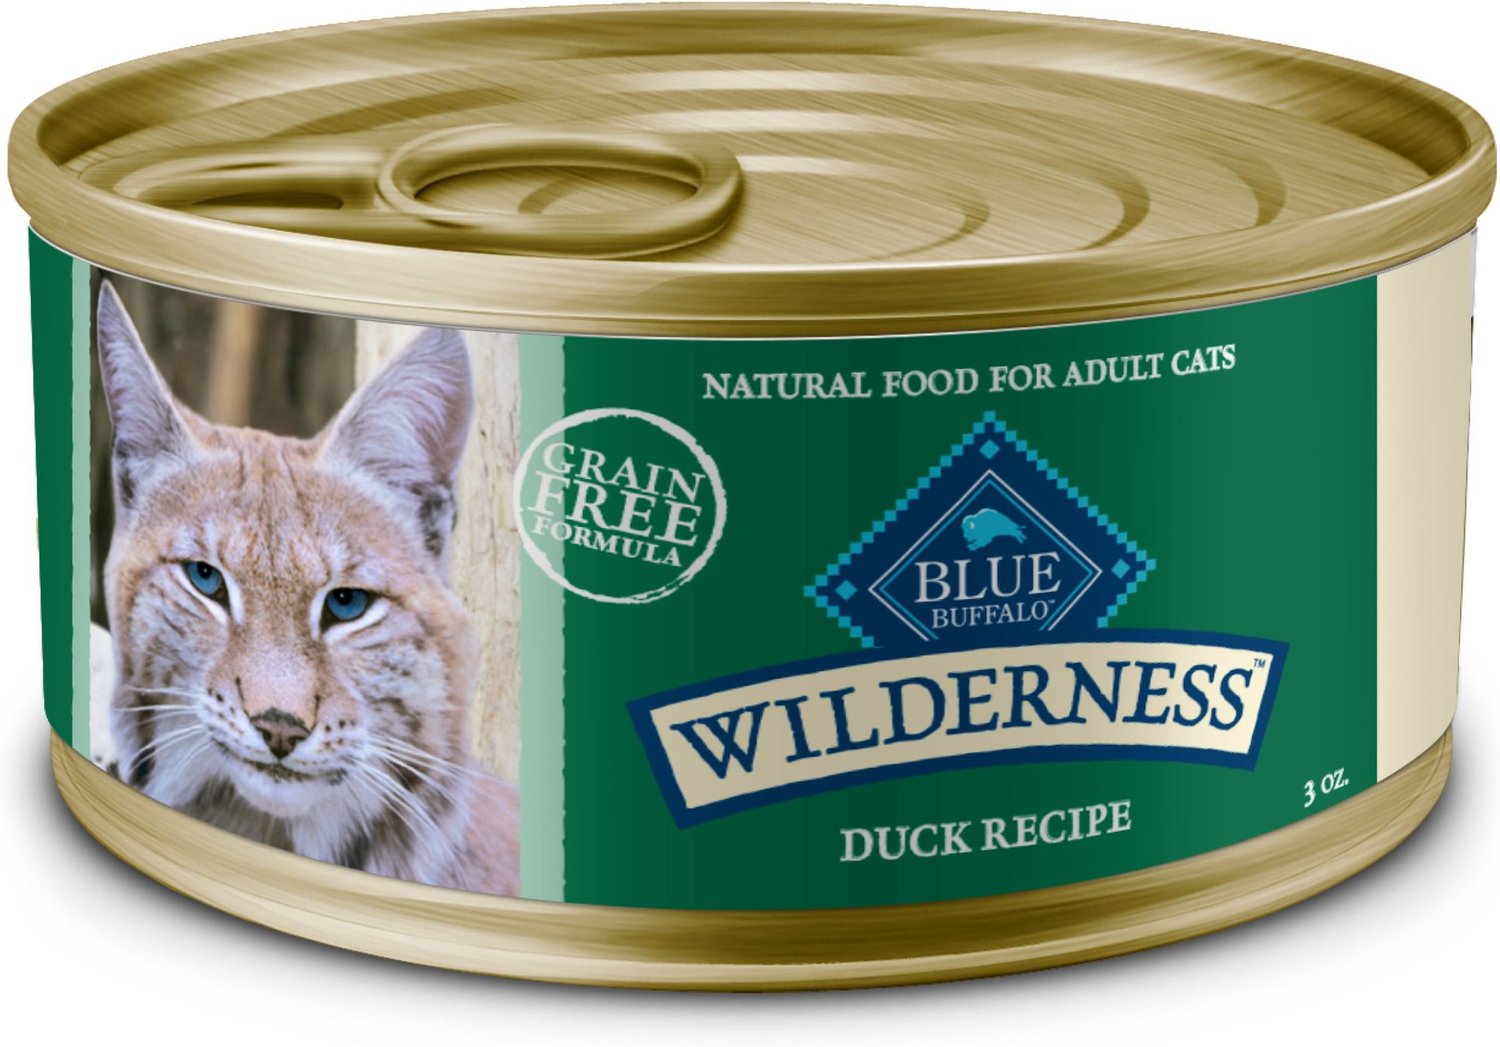 blue-buffalo-wilderness-duck-grain-free-canned-cat-food-3-oz-case-of